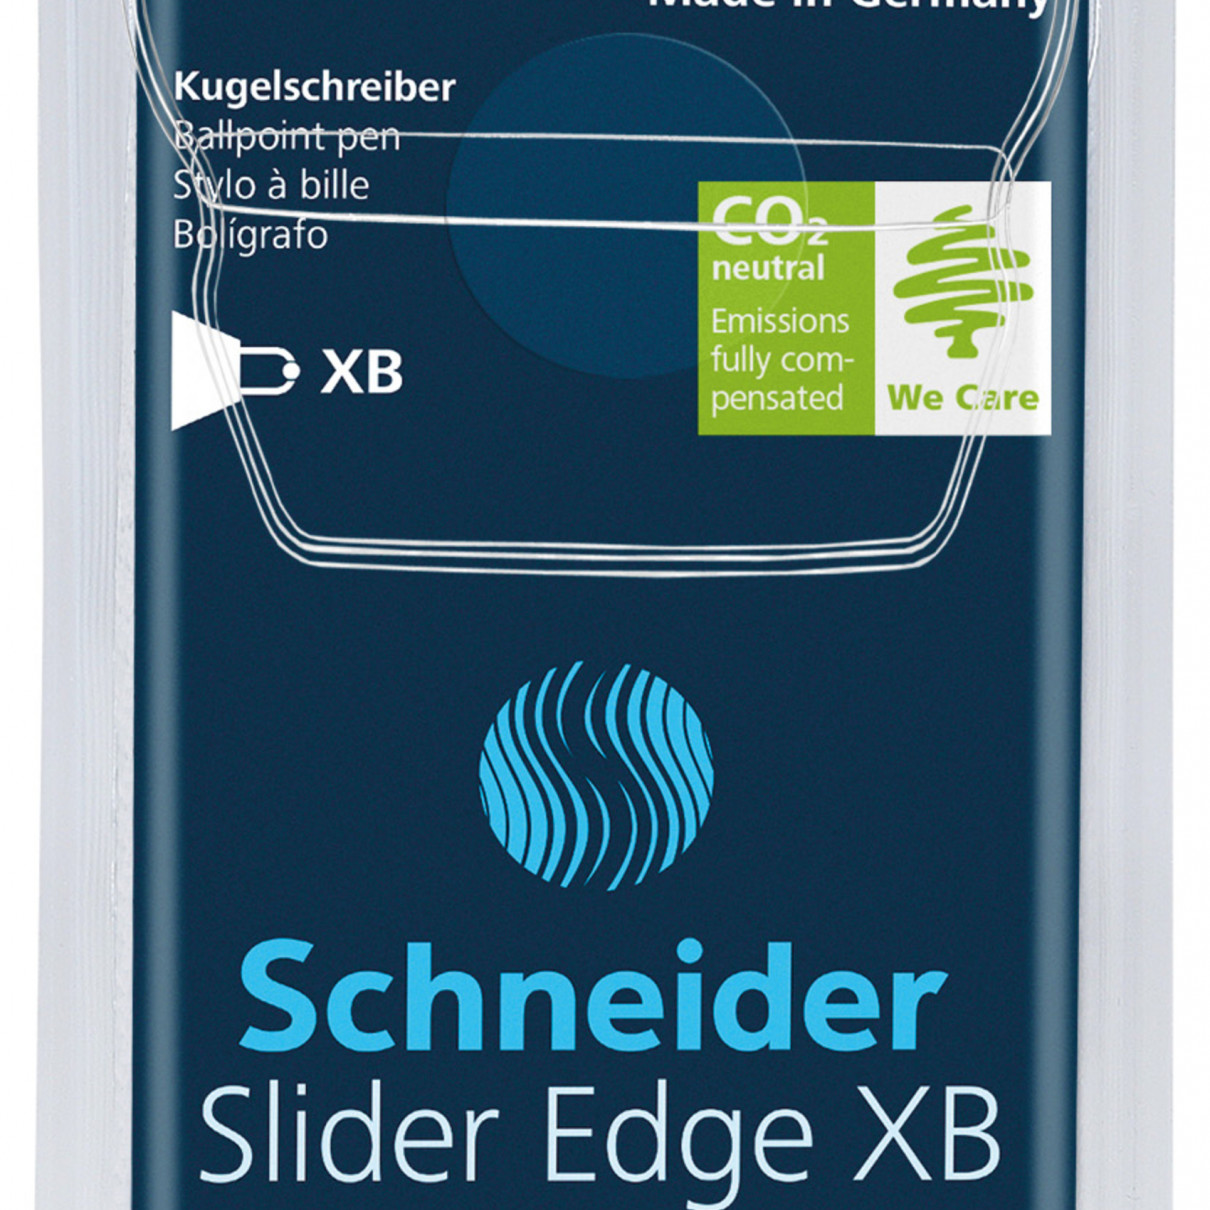 Schneider Slider Edge Ballpoint Pen - Extra Broad - Assorted Colours (Pack of 6)